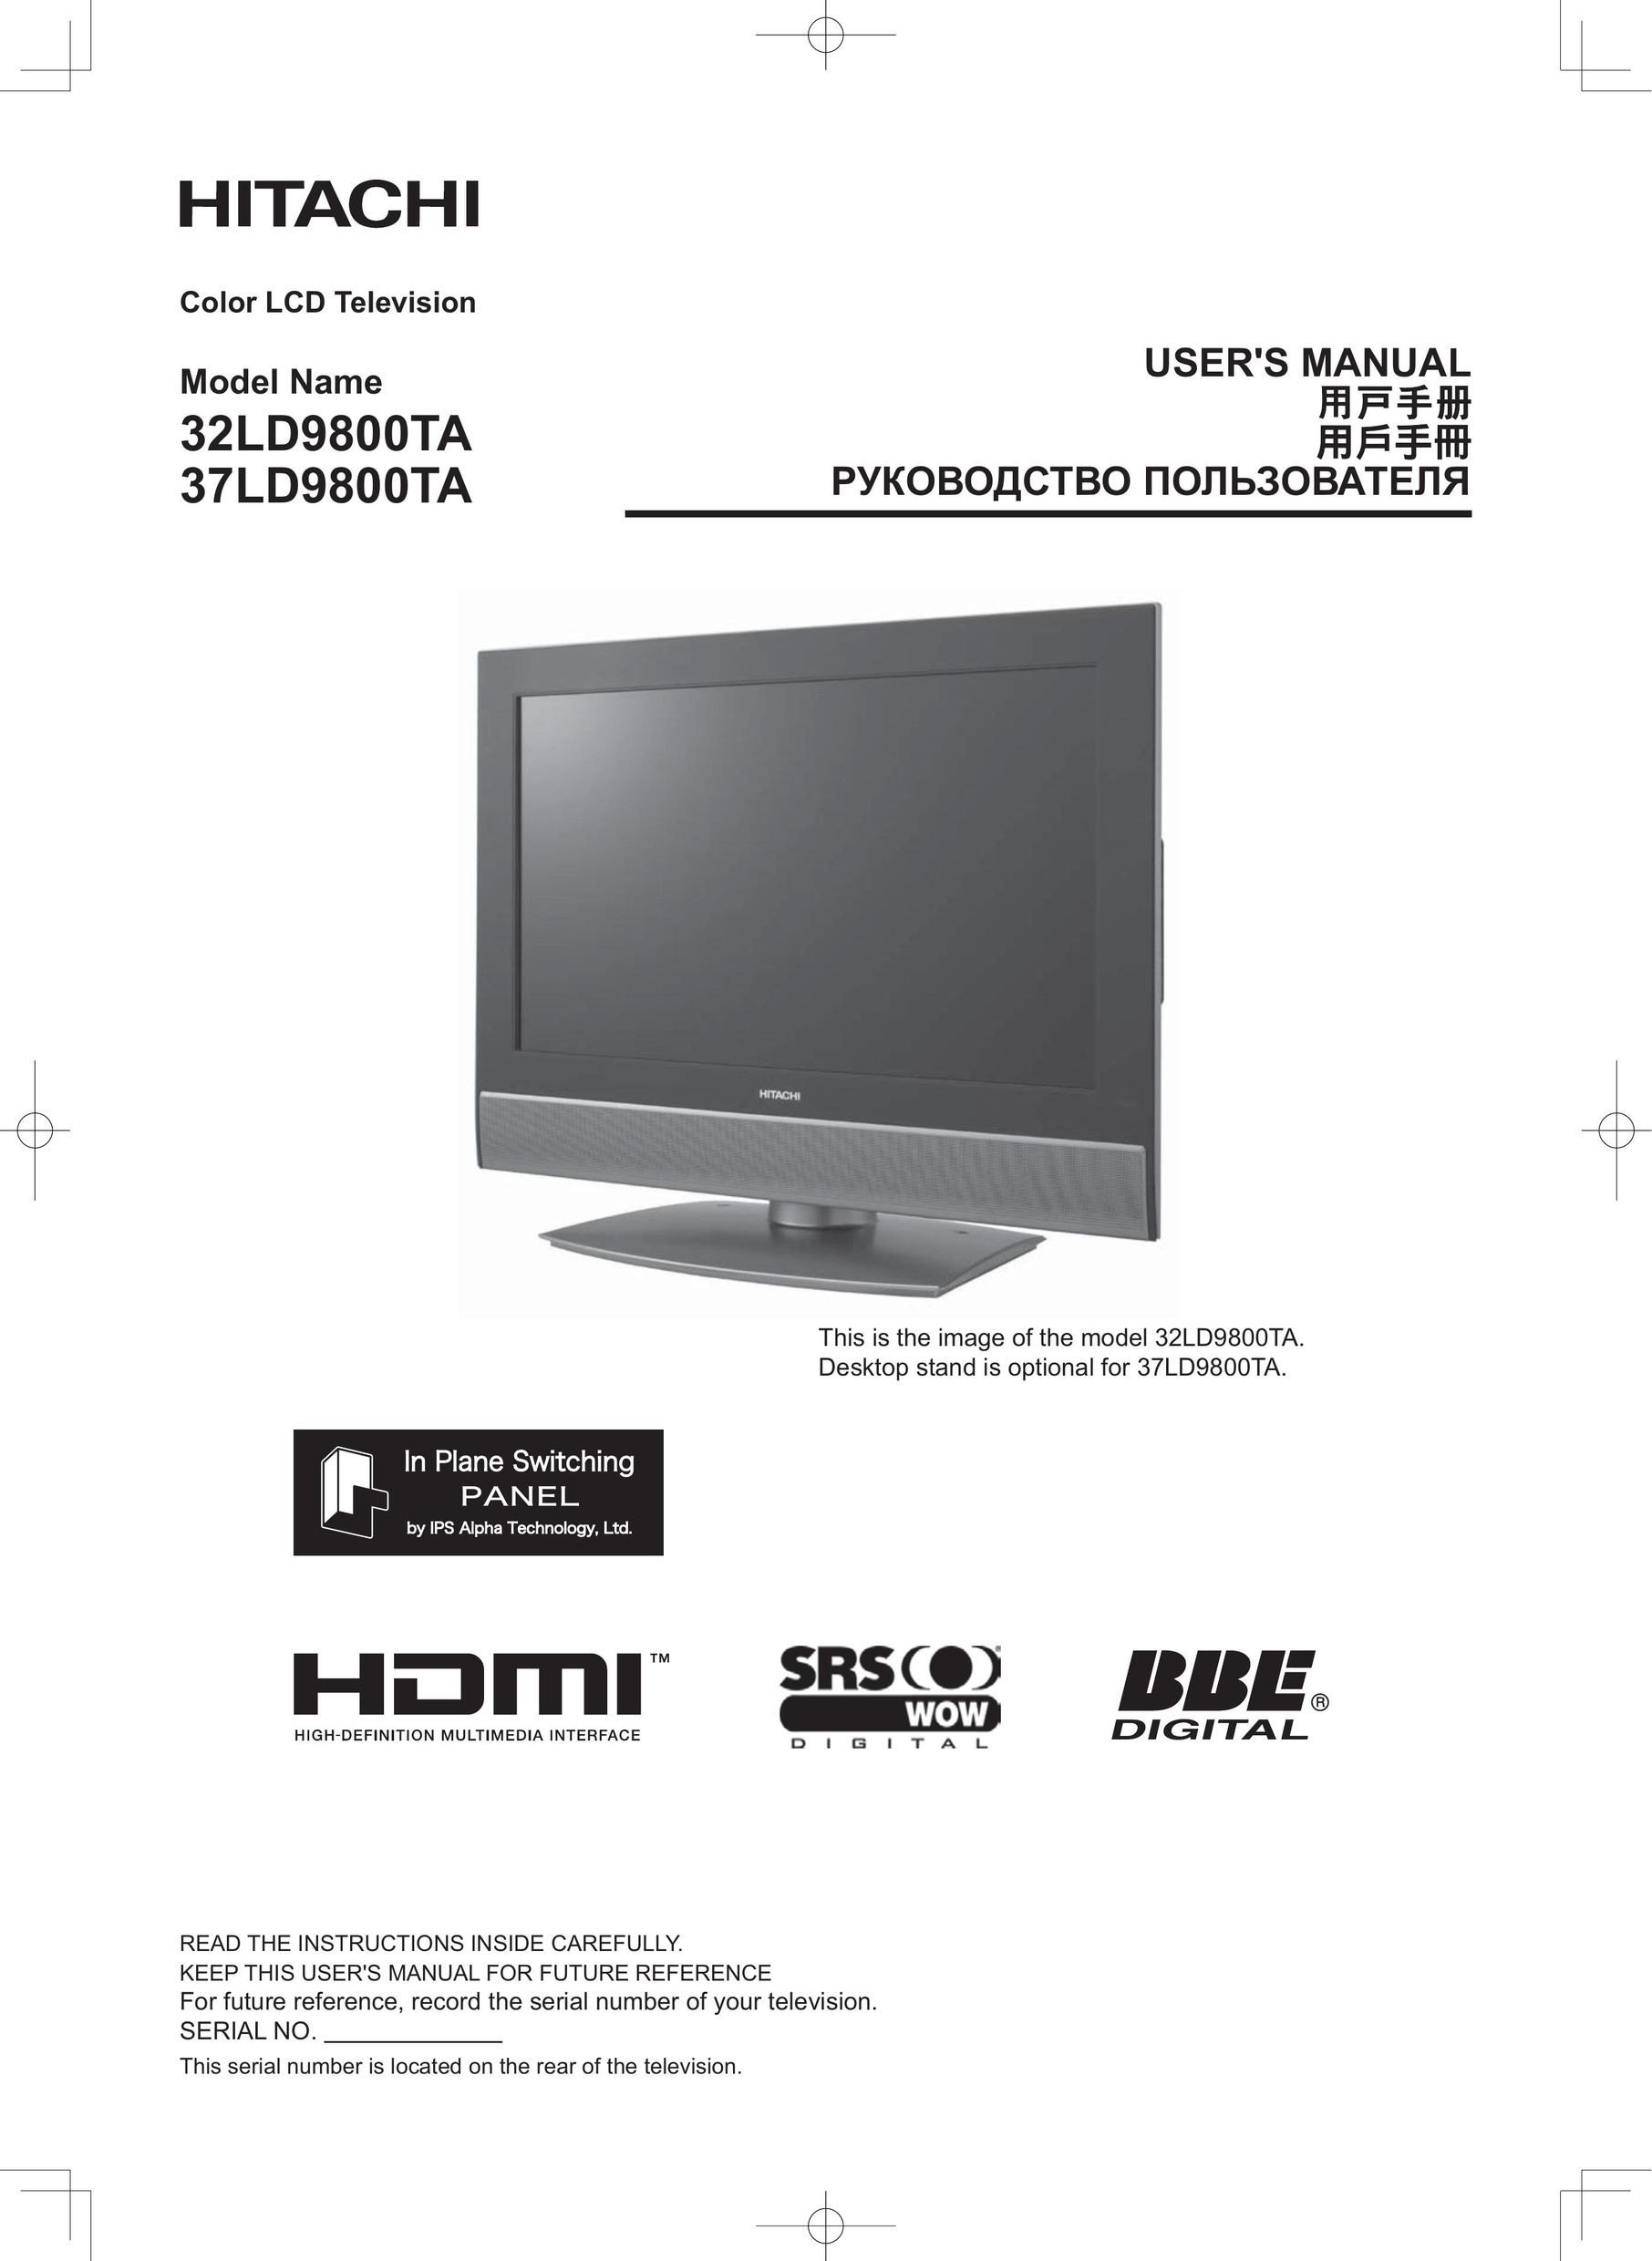 Hitachi 32LD9800TA Flat Panel Television User Manual